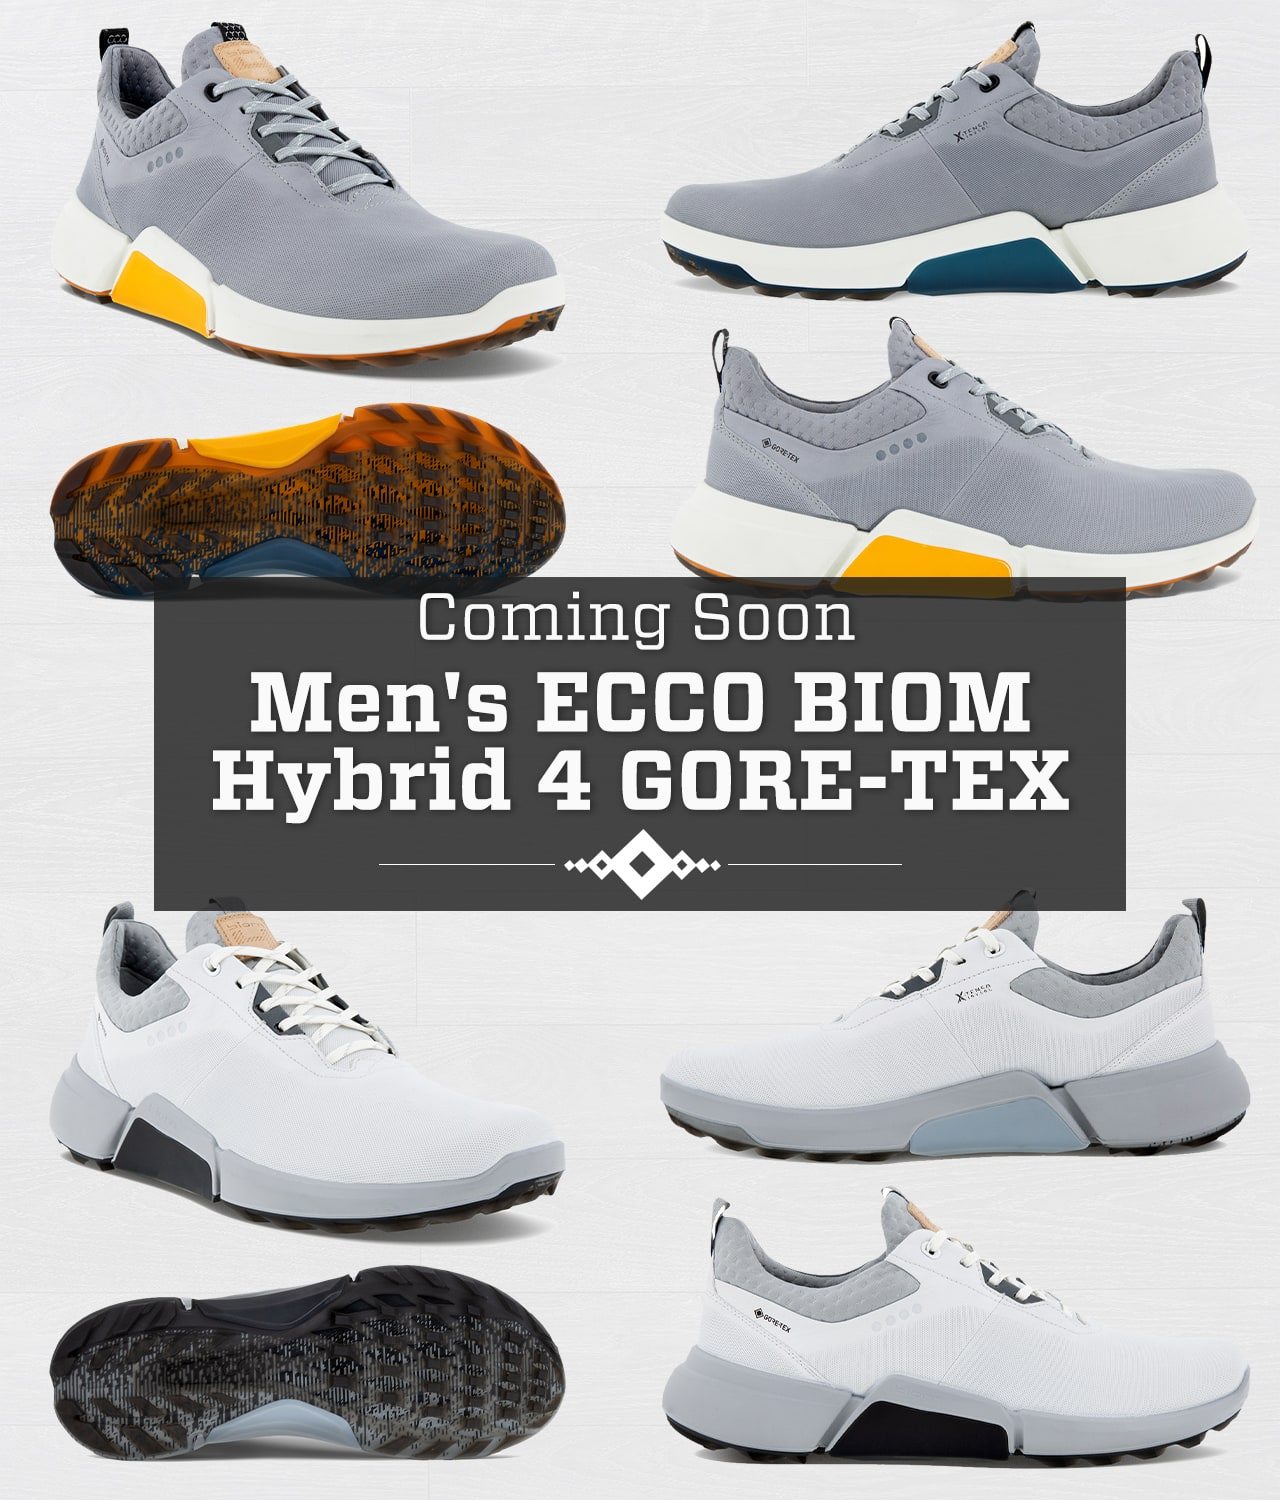 Coming soon. Men's Ecco Biom Hybrid 4 Gore-Tex